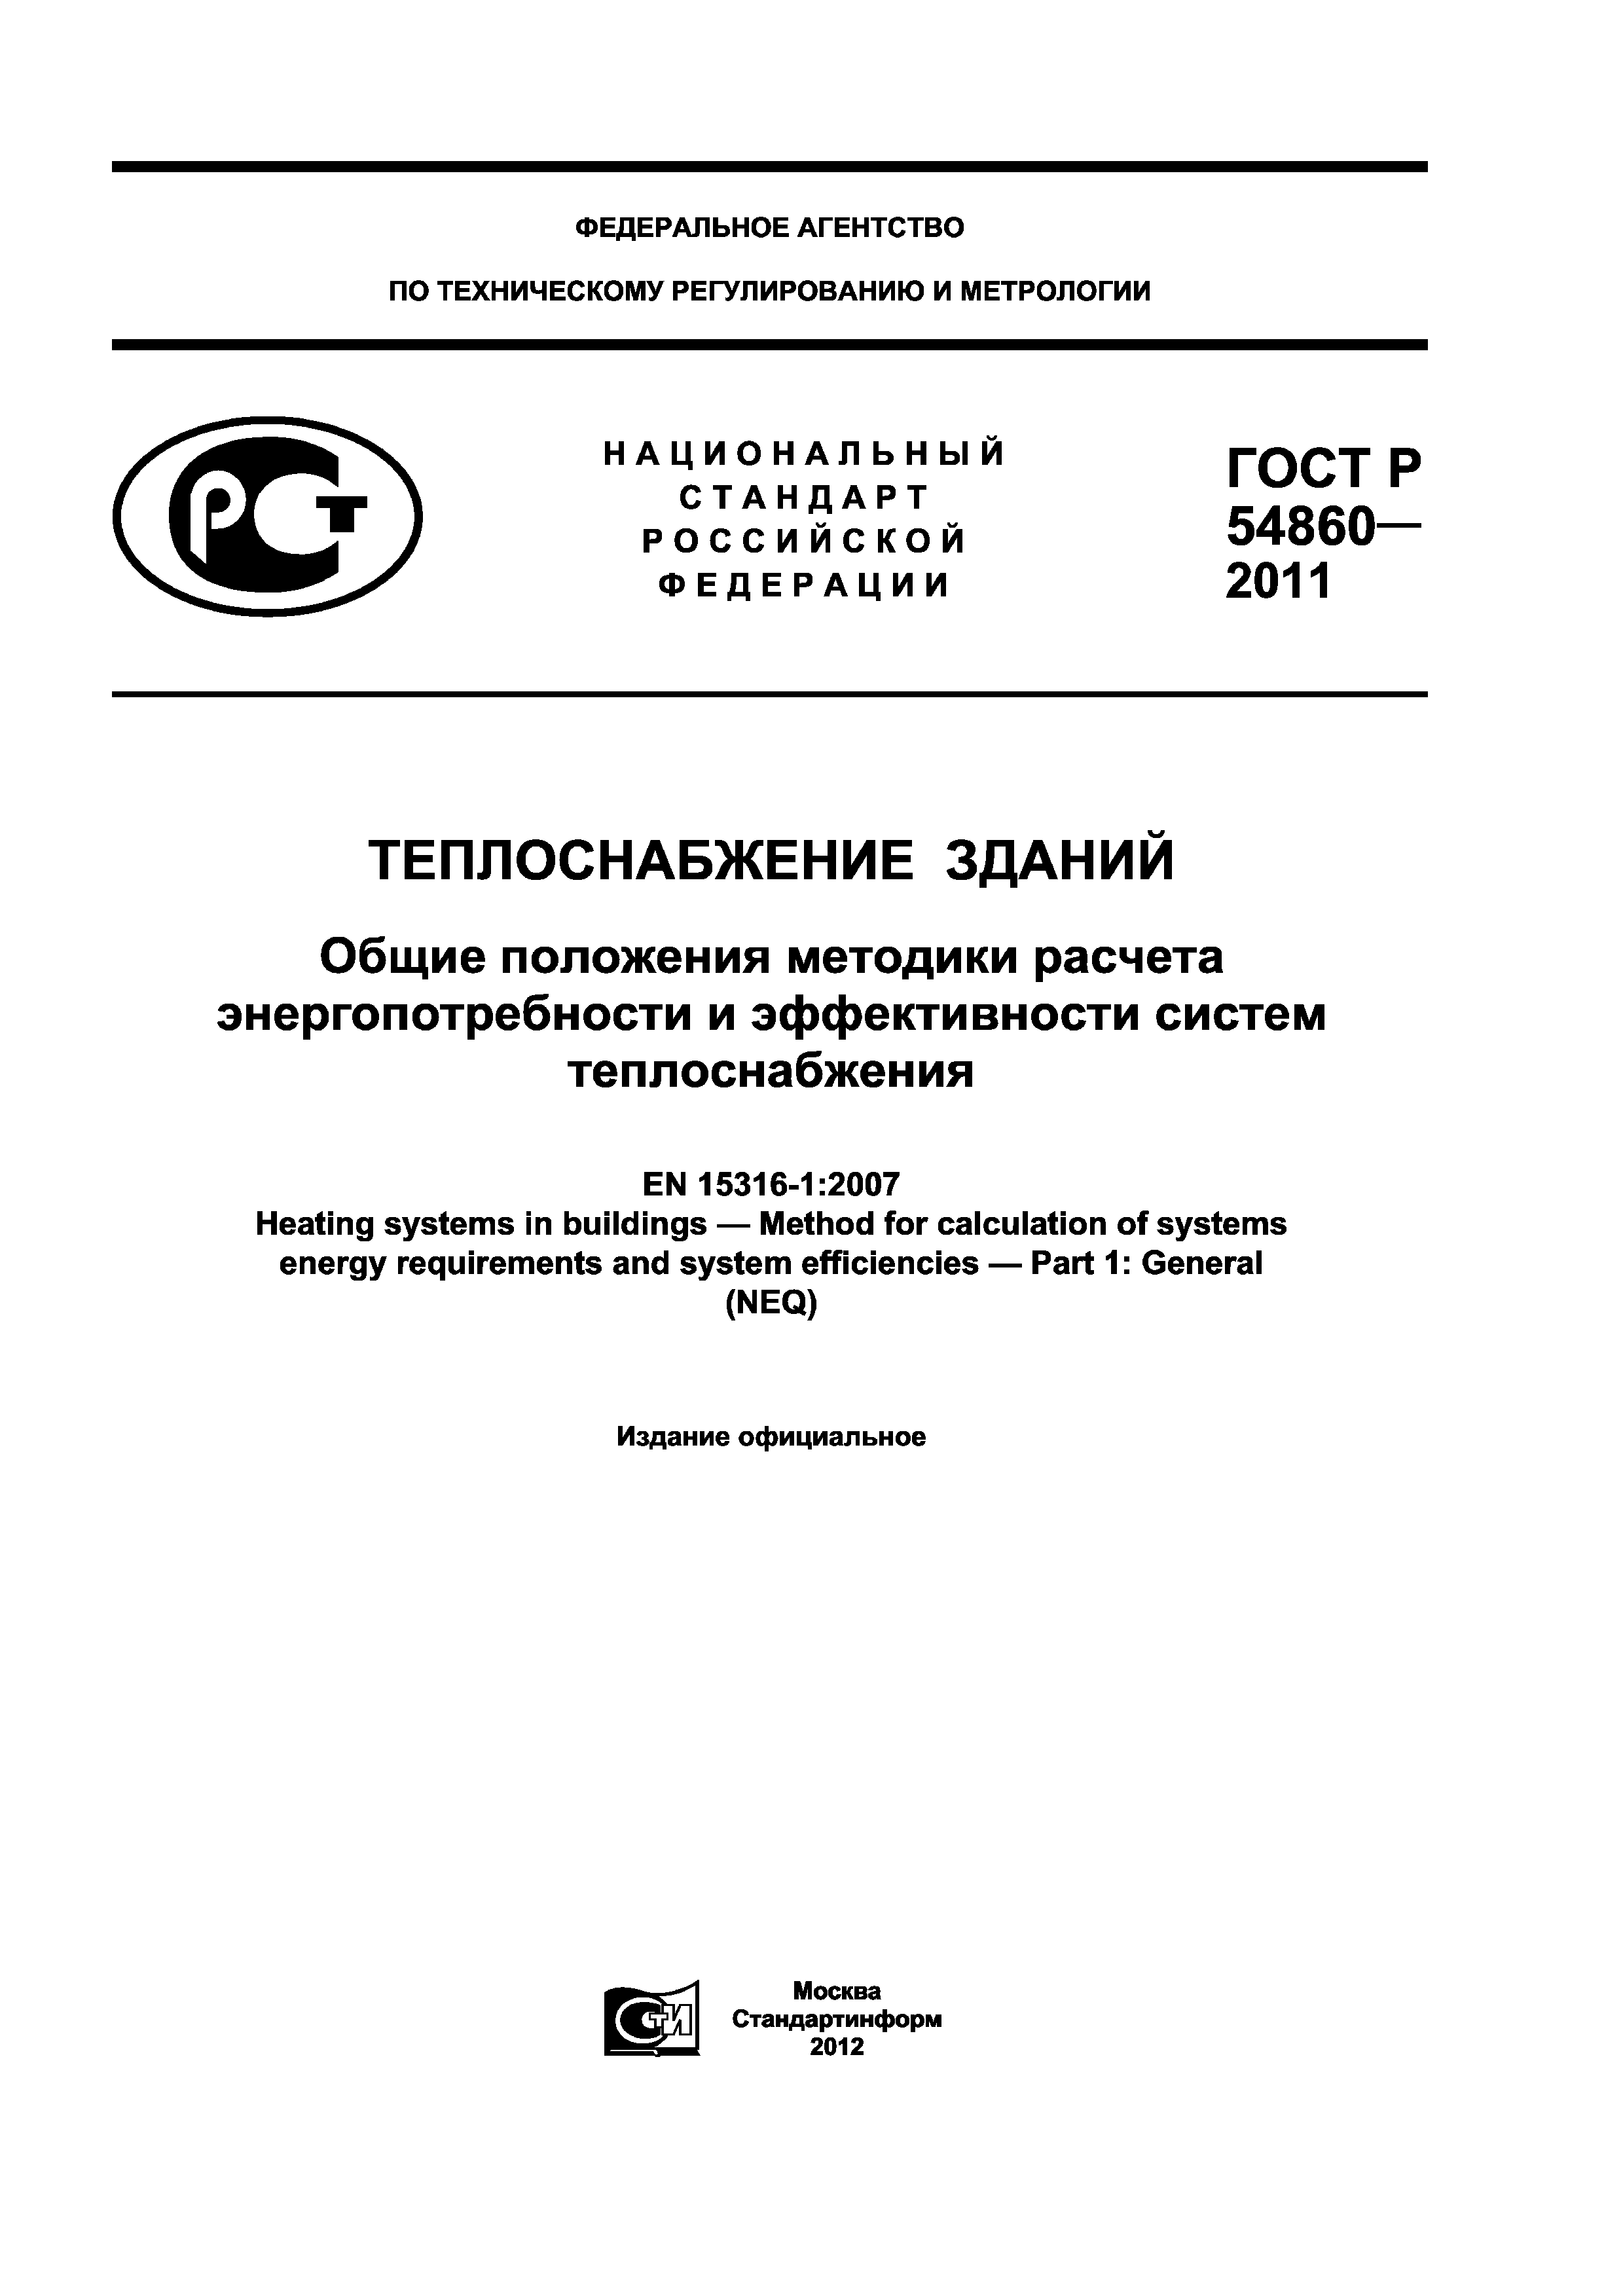 ГОСТ Р 54860-2011